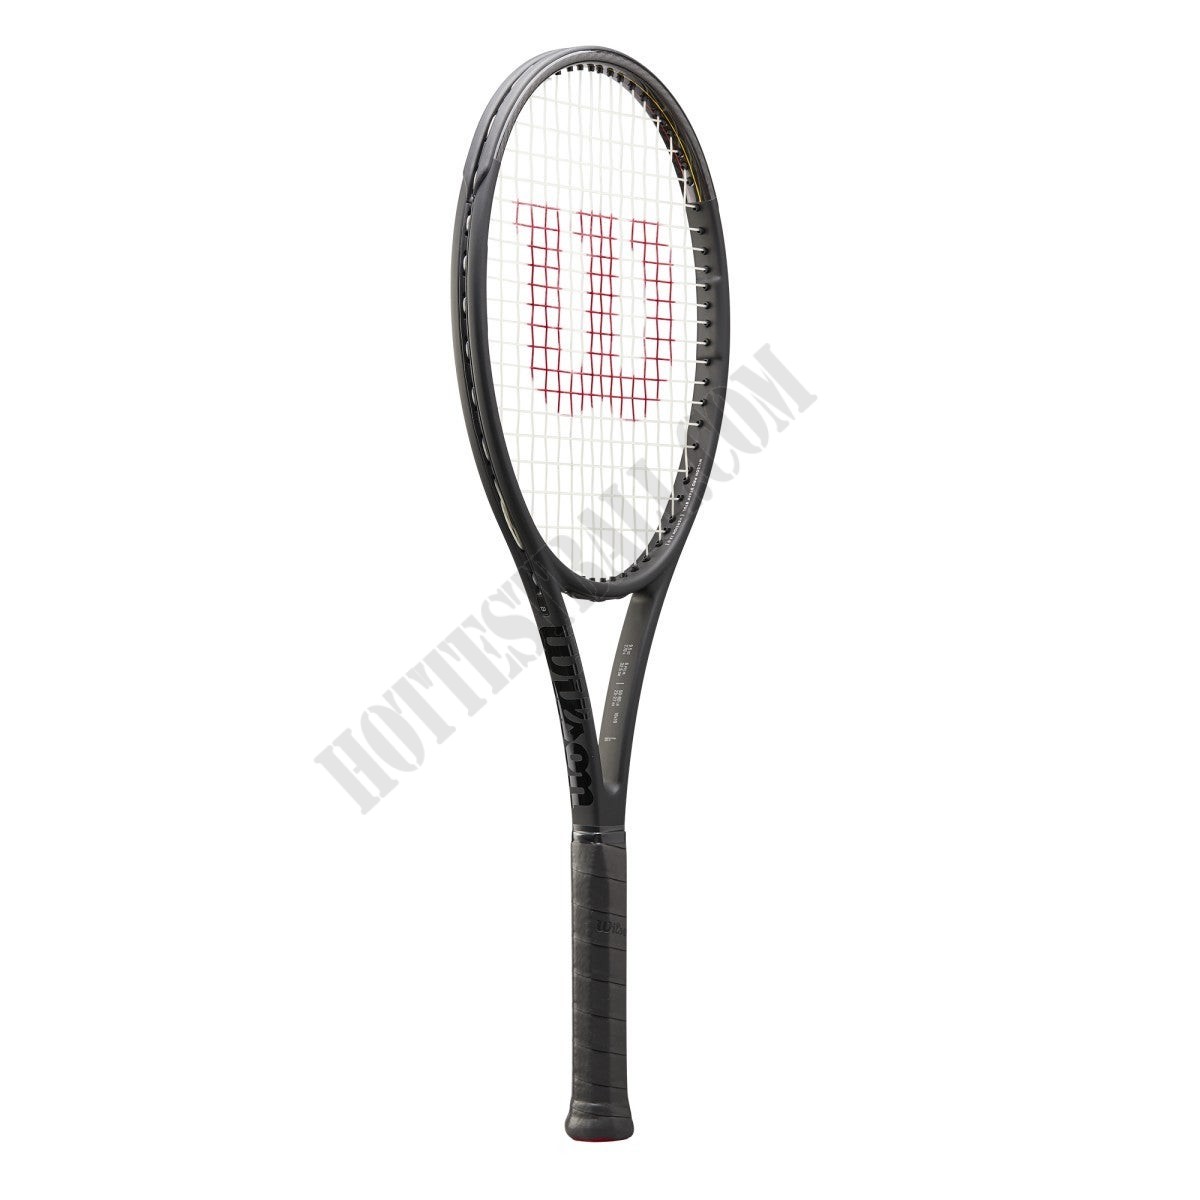 Pro Staff 97UL v13 Tennis Racket - Wilson Discount Store - -0